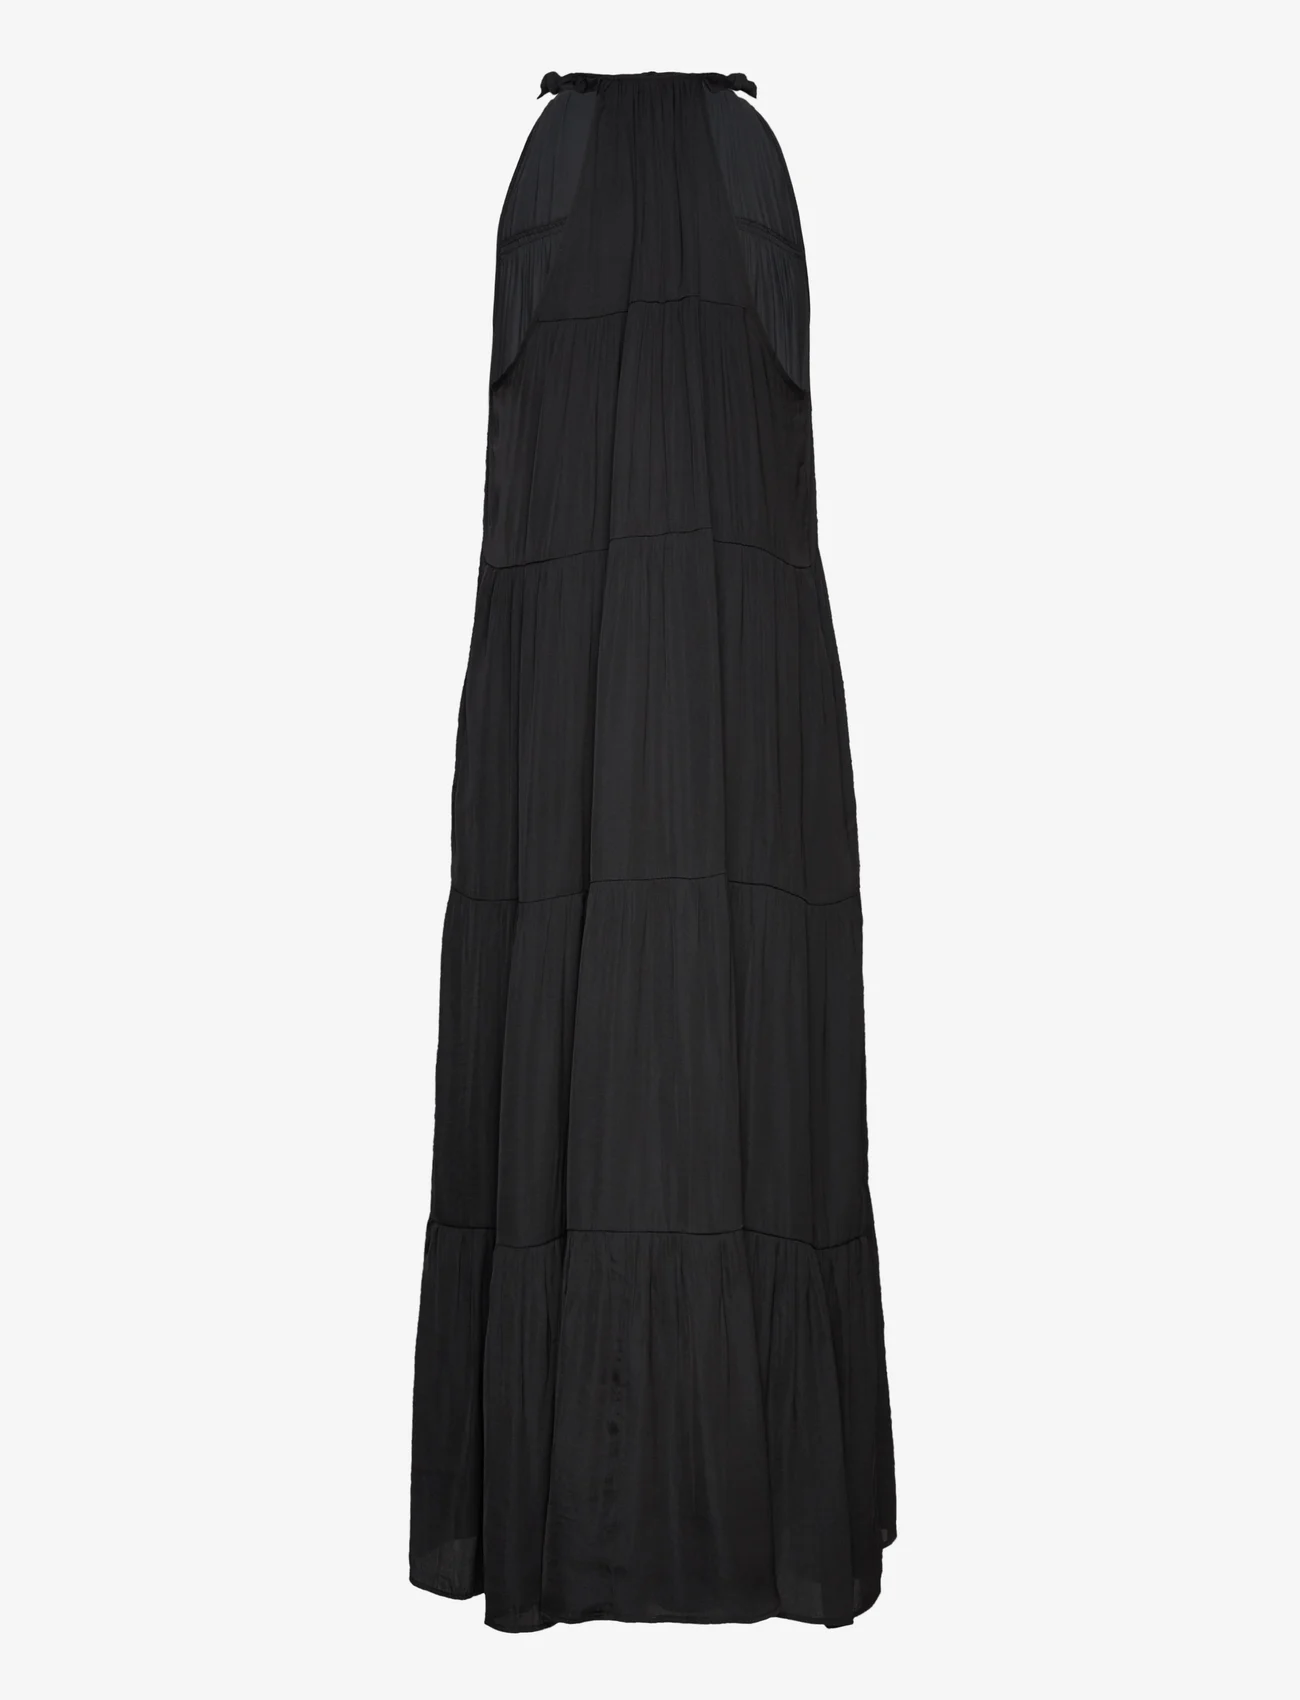 Sofie Schnoor - Long dress - maxi dresses - black - 1